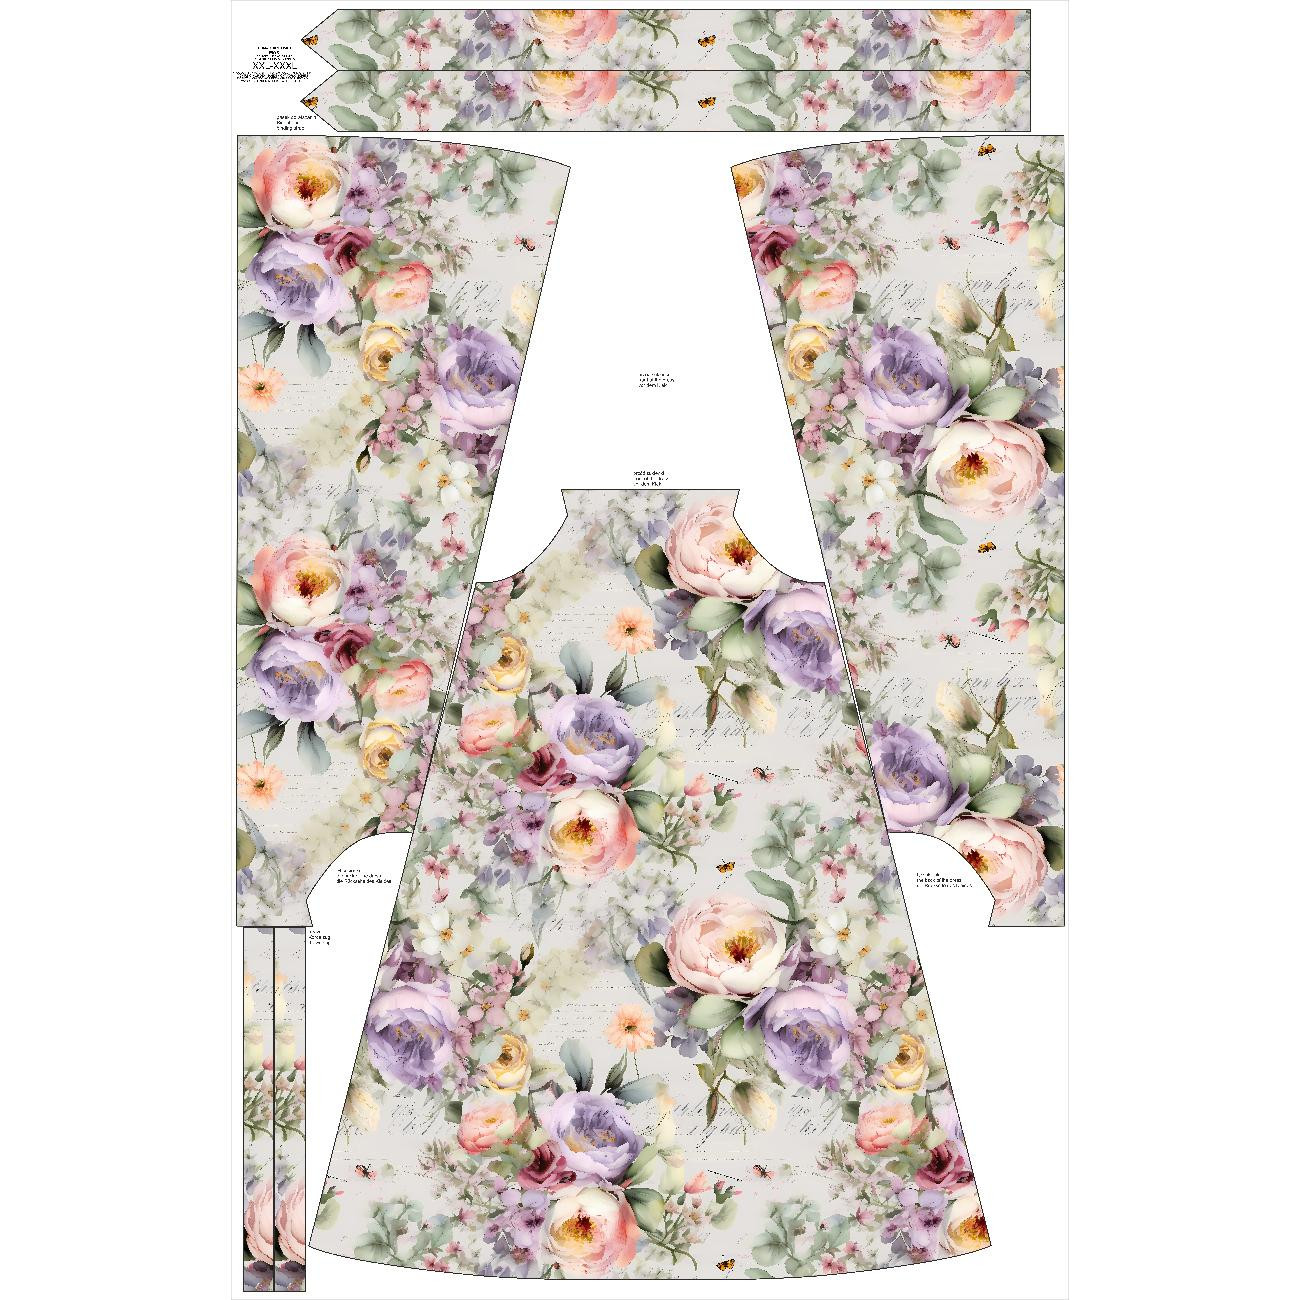 DRESS "DALIA" MAXI - VINTAGE FLOWERS pat. 15 - sewing set